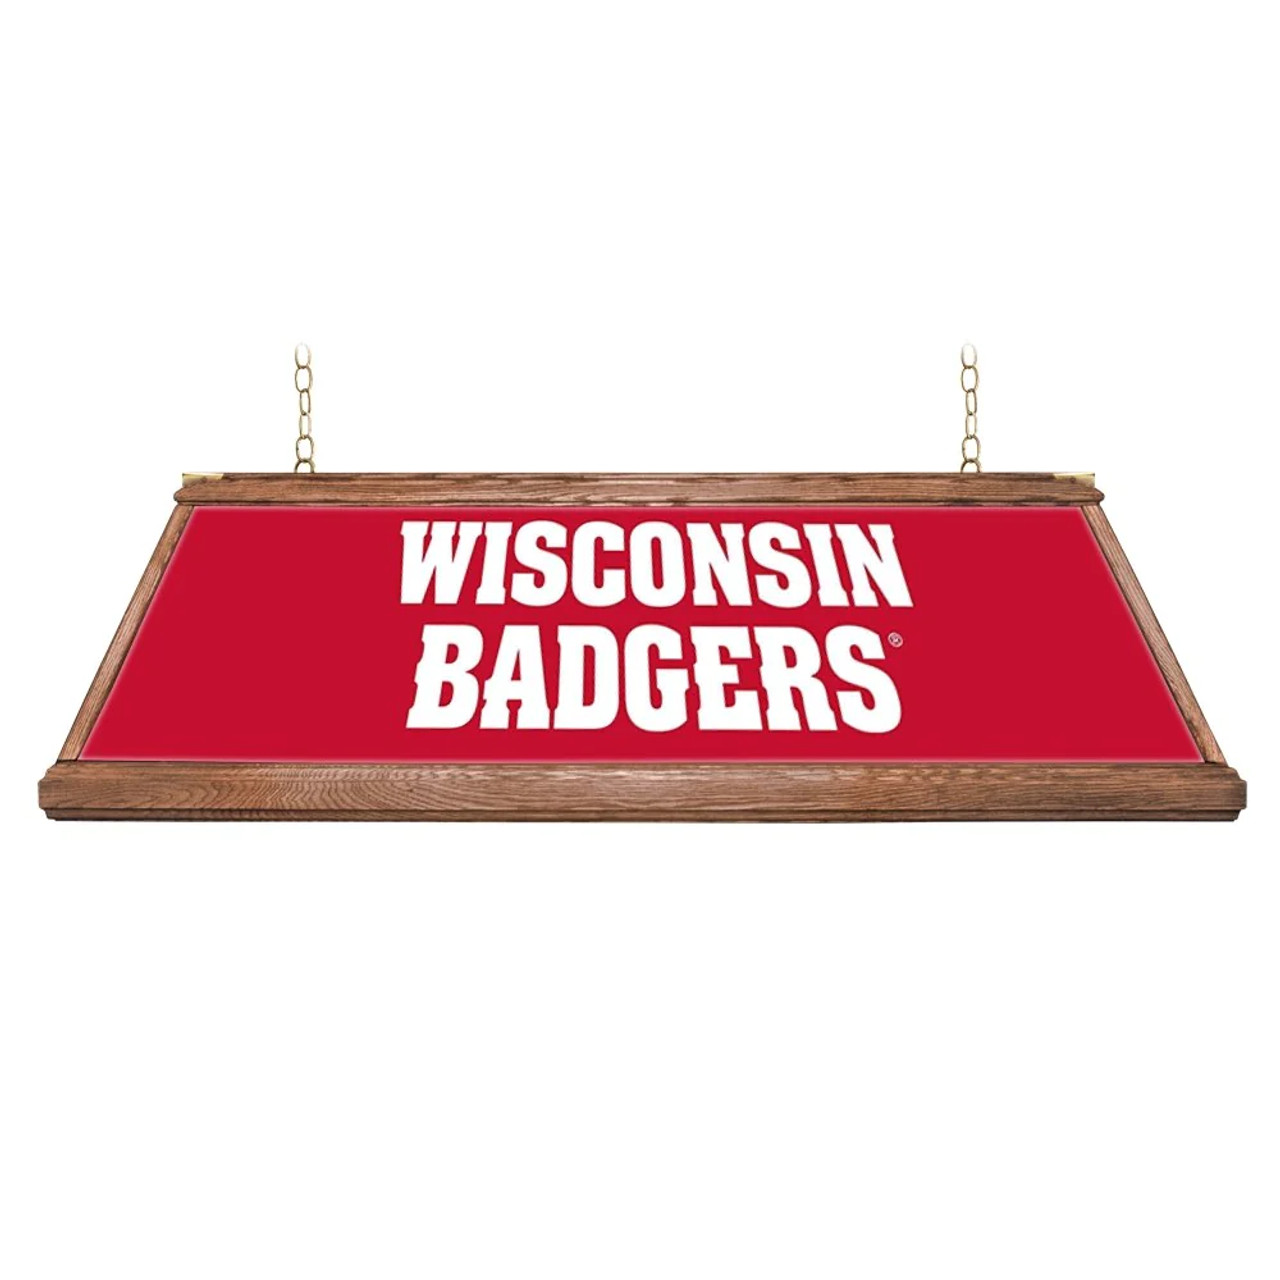 WI, Wisconsin, Badgers, Premium, Wood, Billiard, Pool, Cardinal, Red, Table, Light, Lamp, NCWISB-330-01A, NCWISB-330-01B, The Fan-Brand, 687747753682